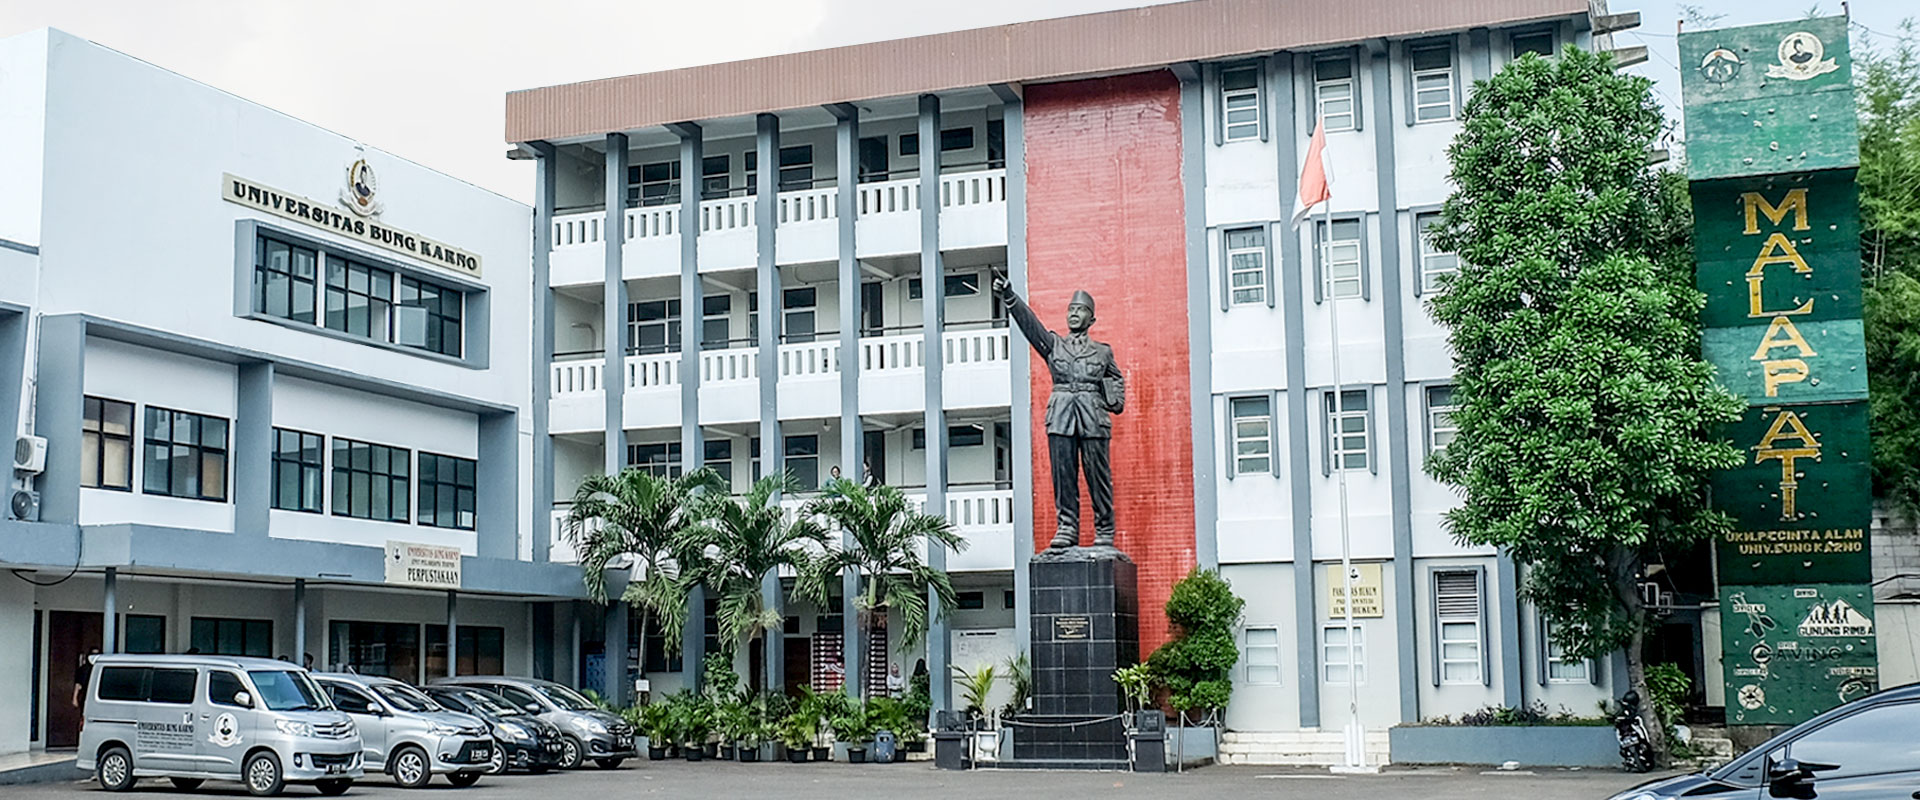 Universitas Bung Karno